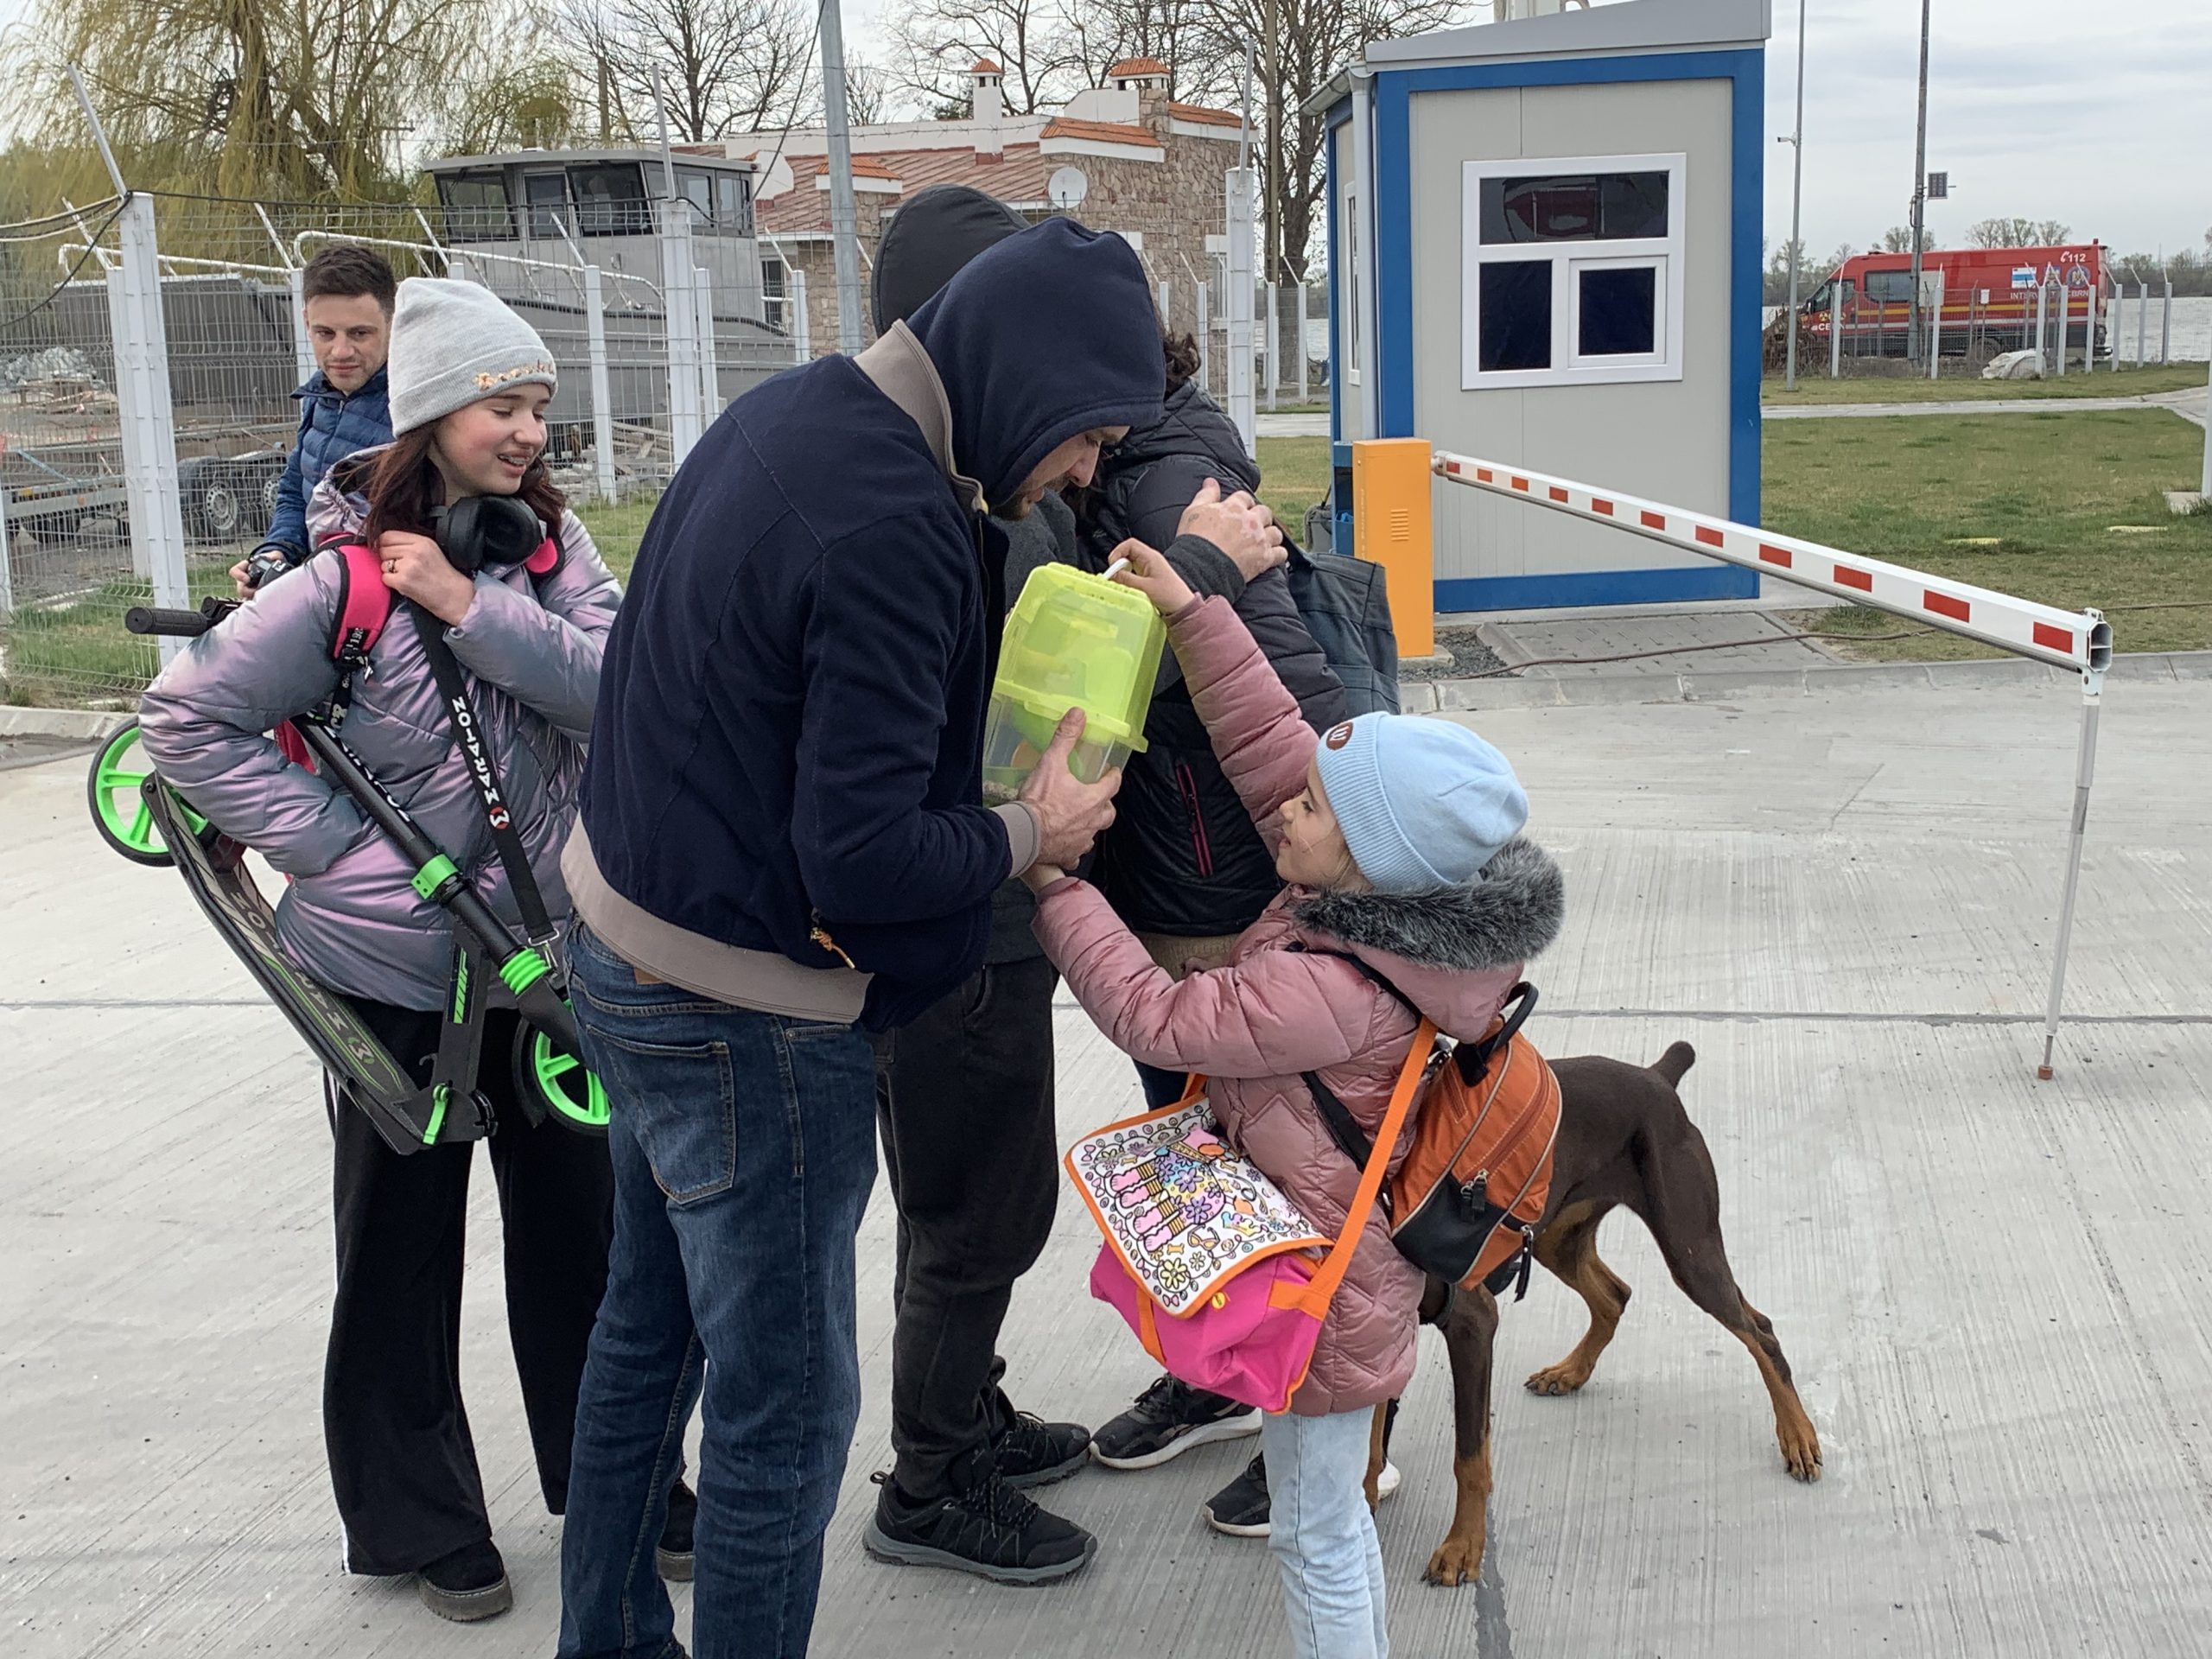 Family reunion at Ukraine border